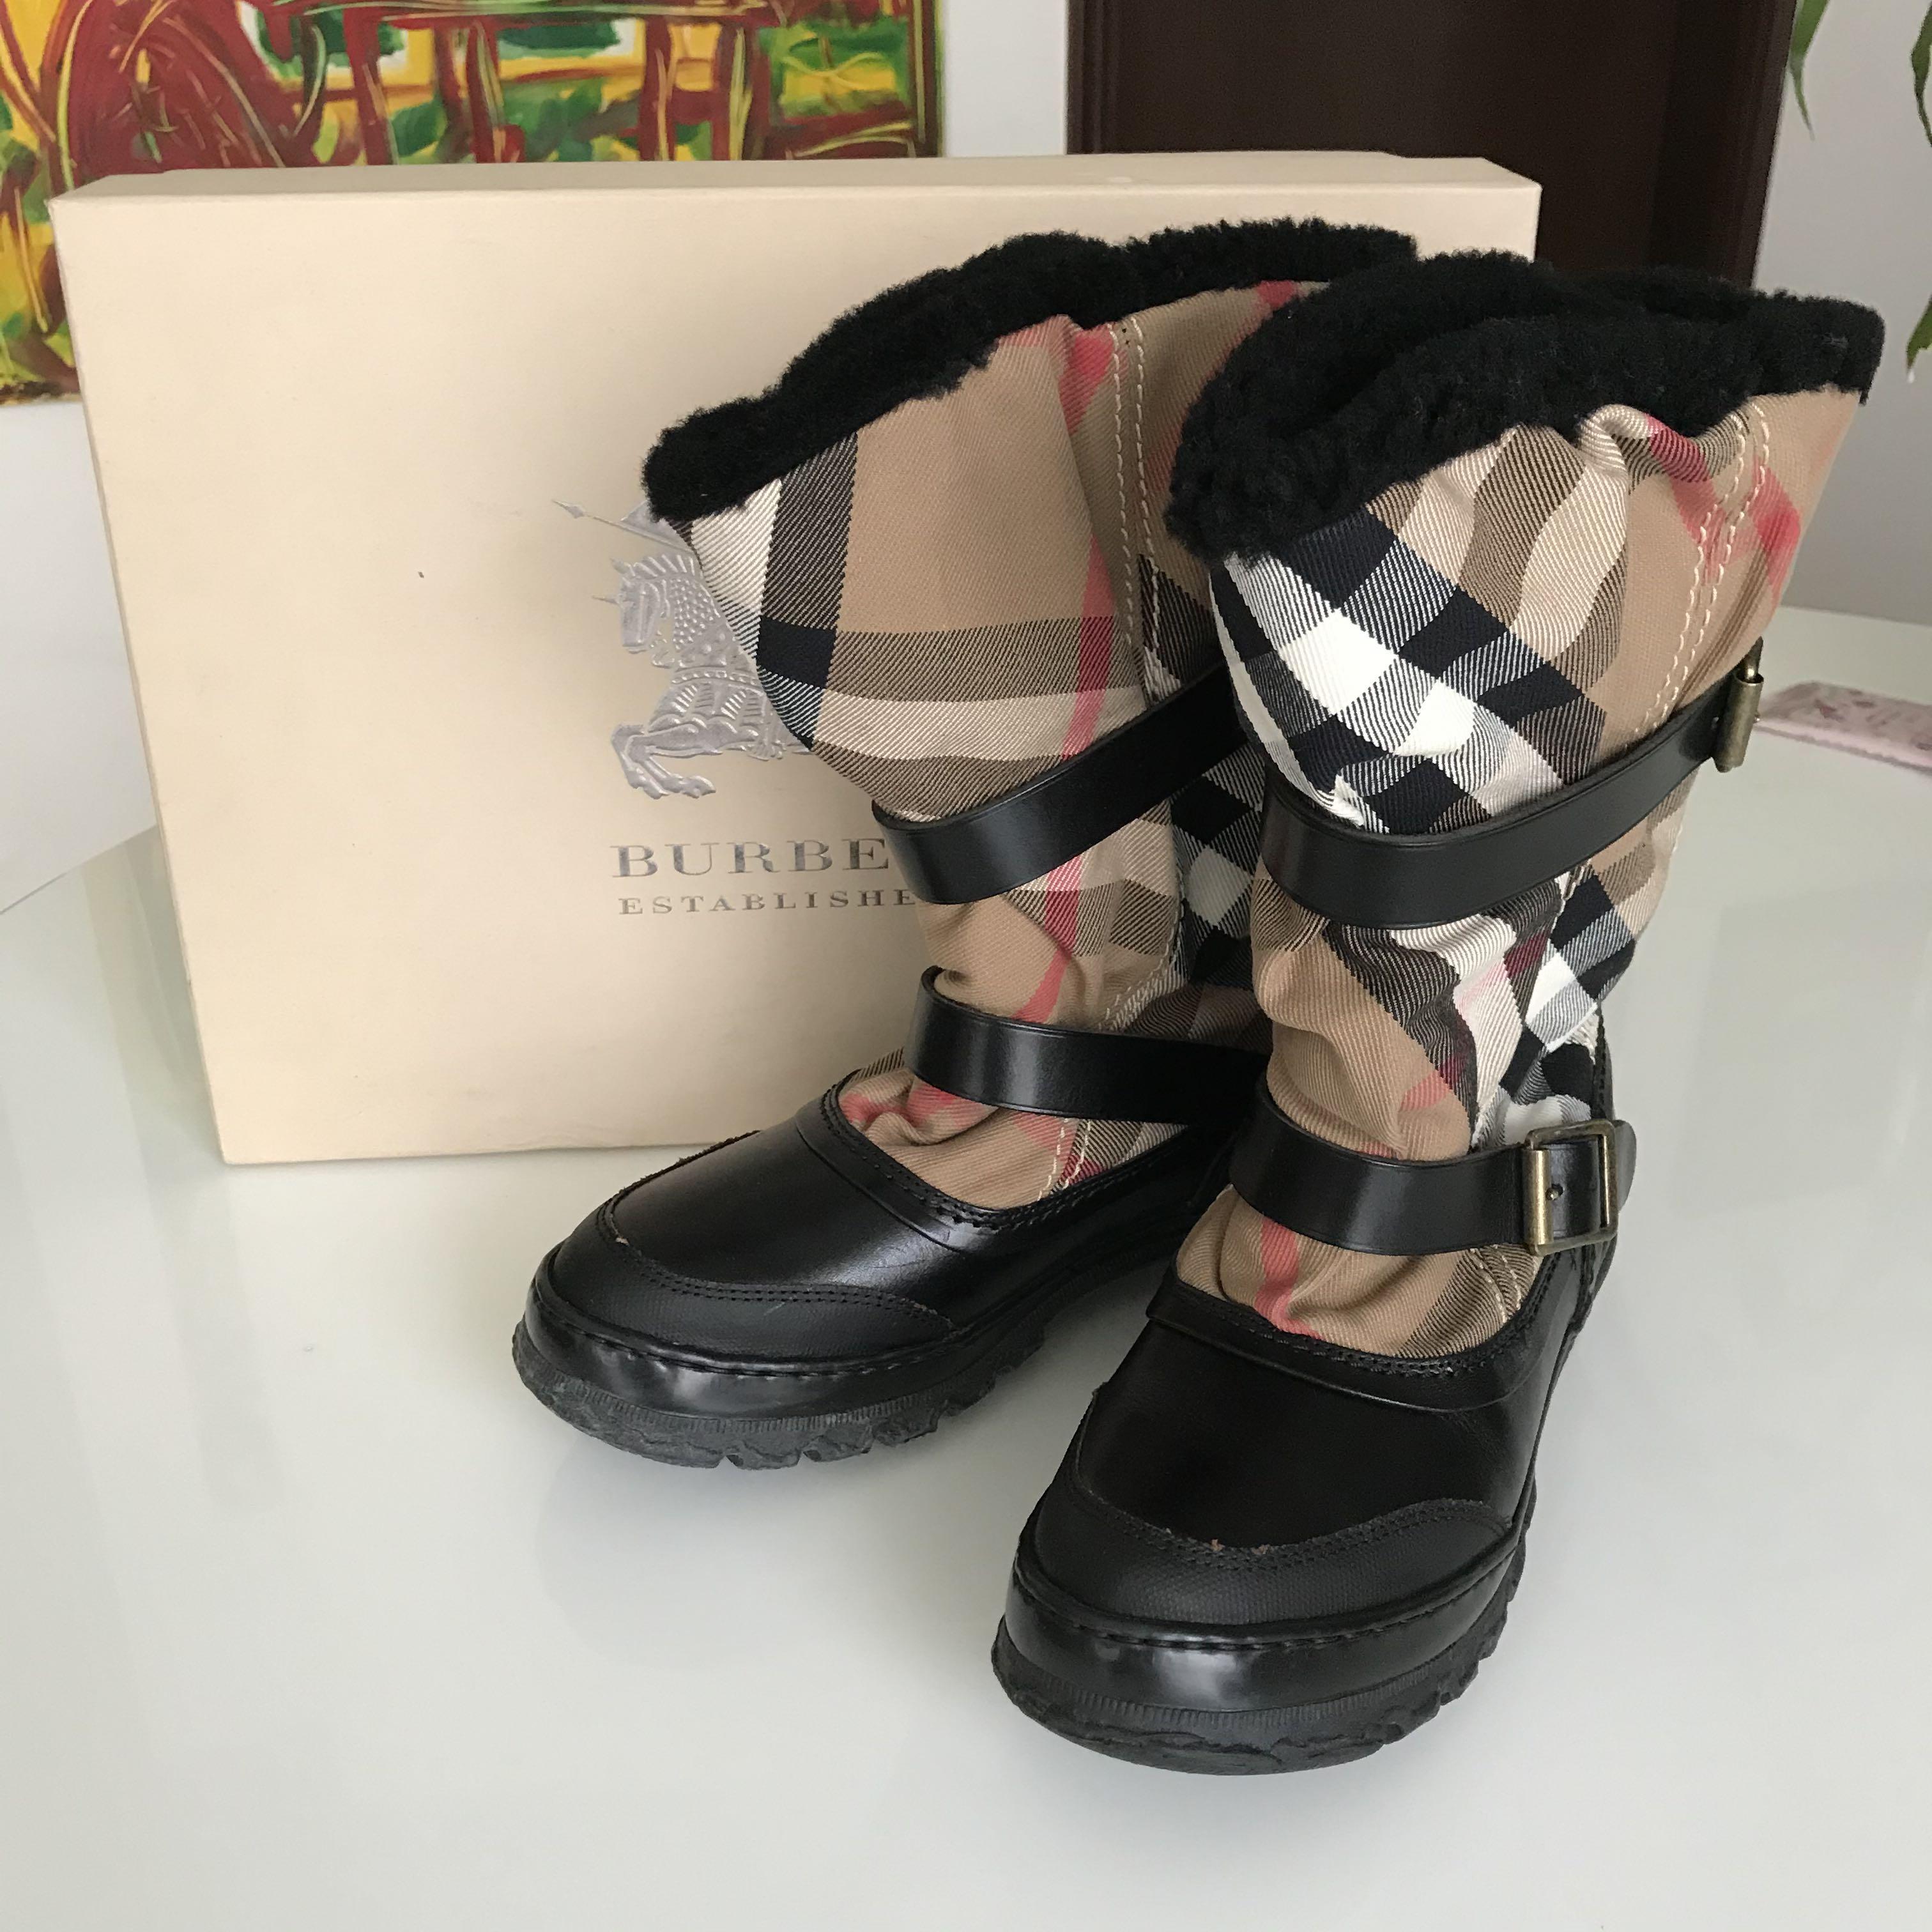 Burberry Winter Snow Boots, Luxury 